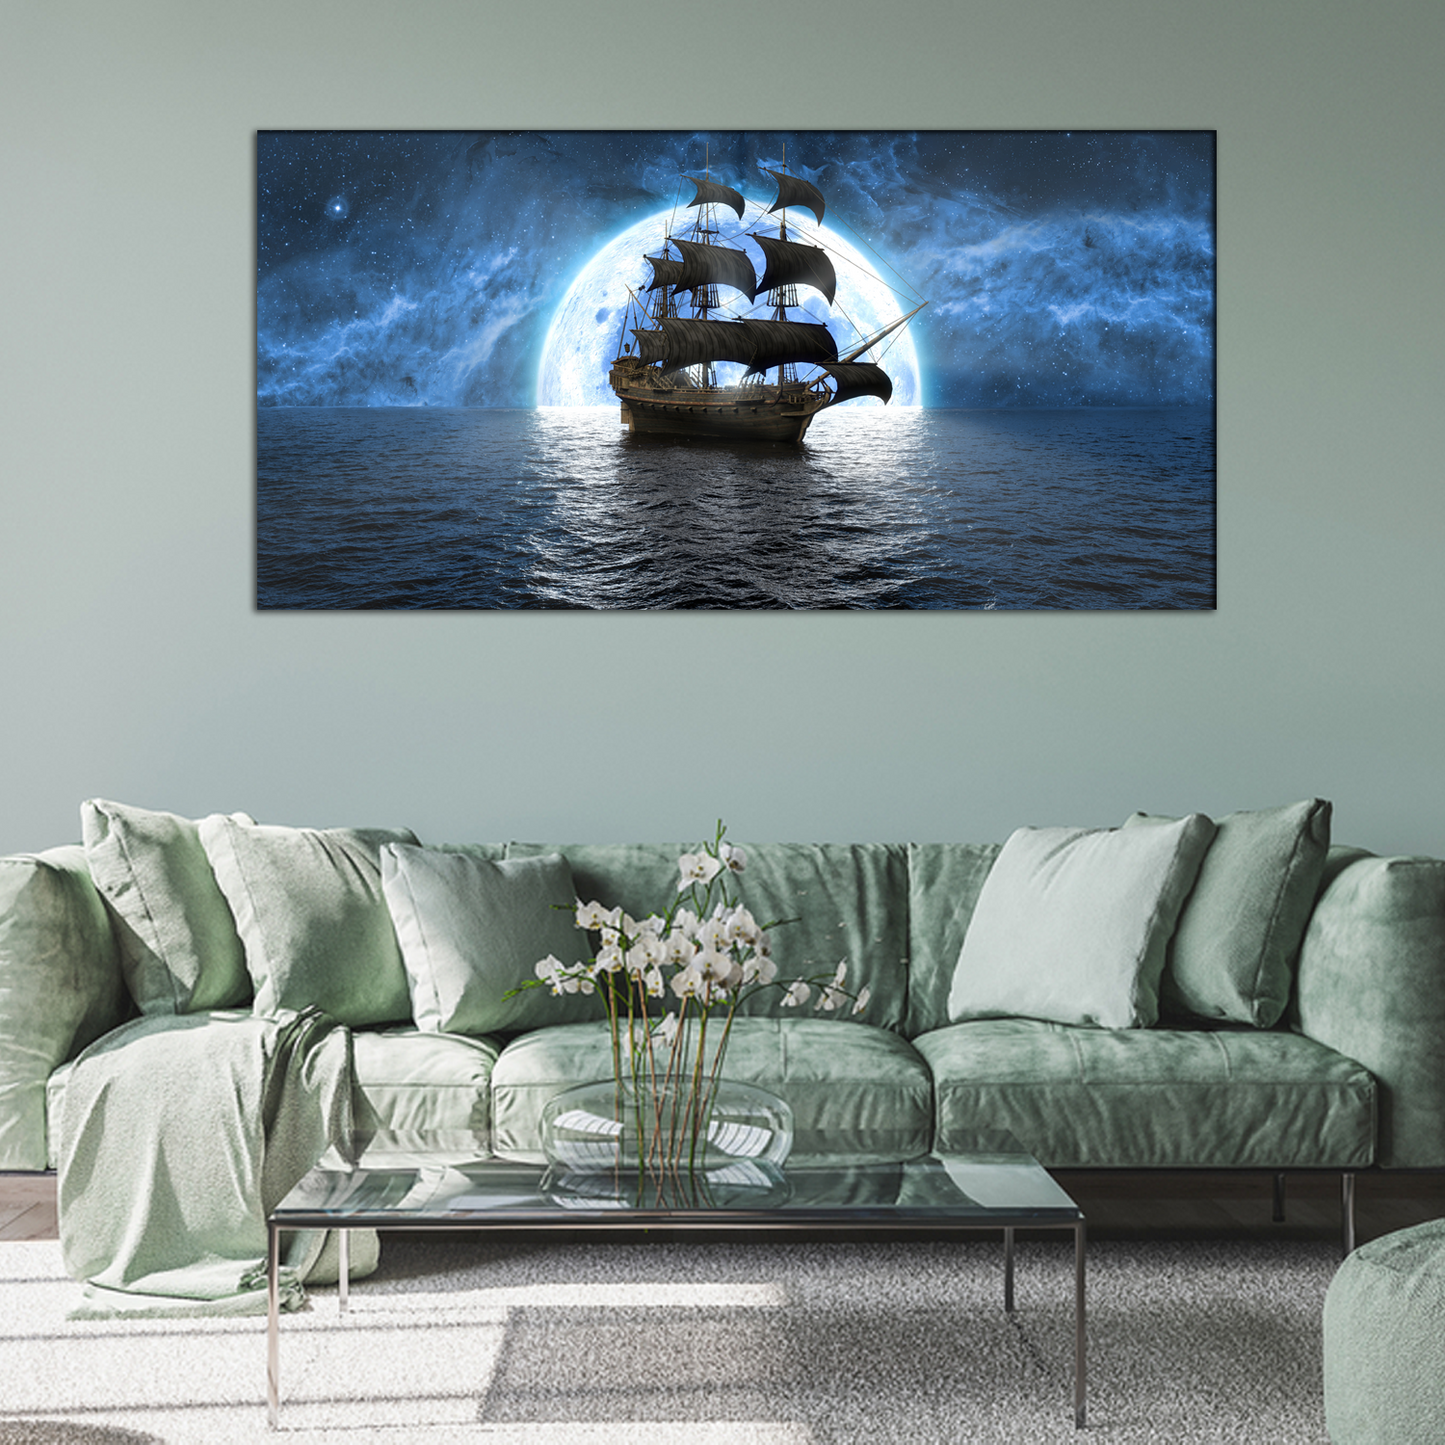 Ship at Sea with Large Moon Canvas Print Wall Painting